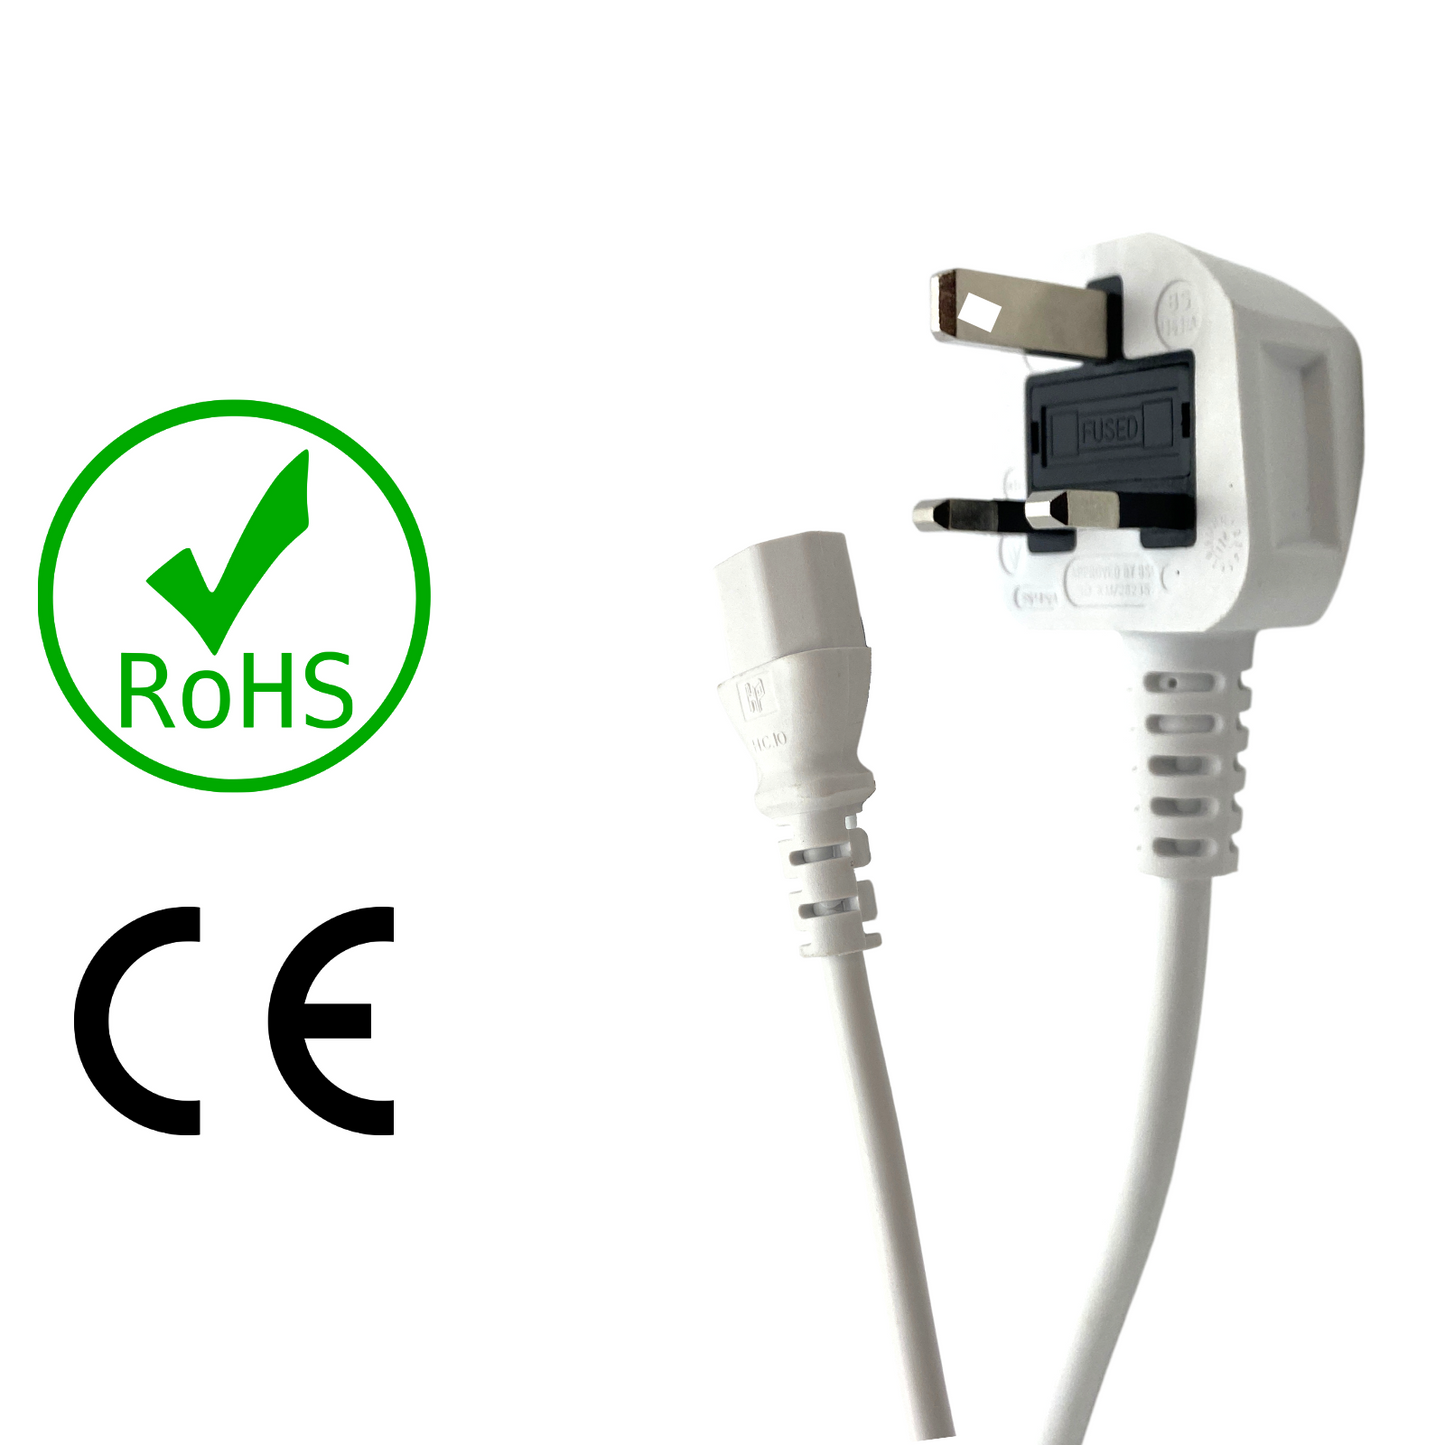 IEC C13 Straight Mains Leads - White